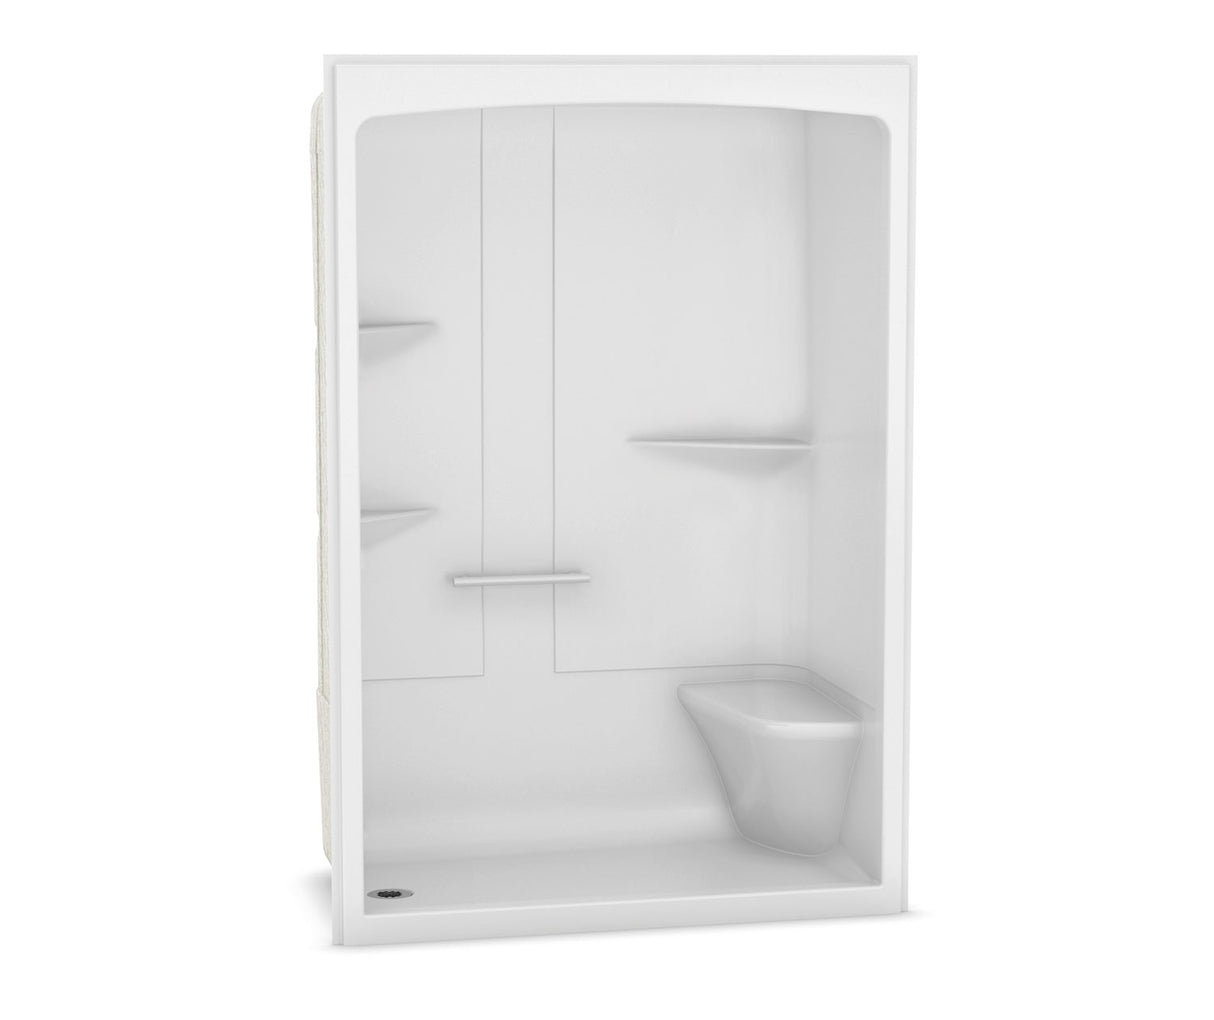 MAAX 105922-NC-000-001 Camelia SHR-6034 Acrylic Alcove Center Drain One-Piece Shower in White